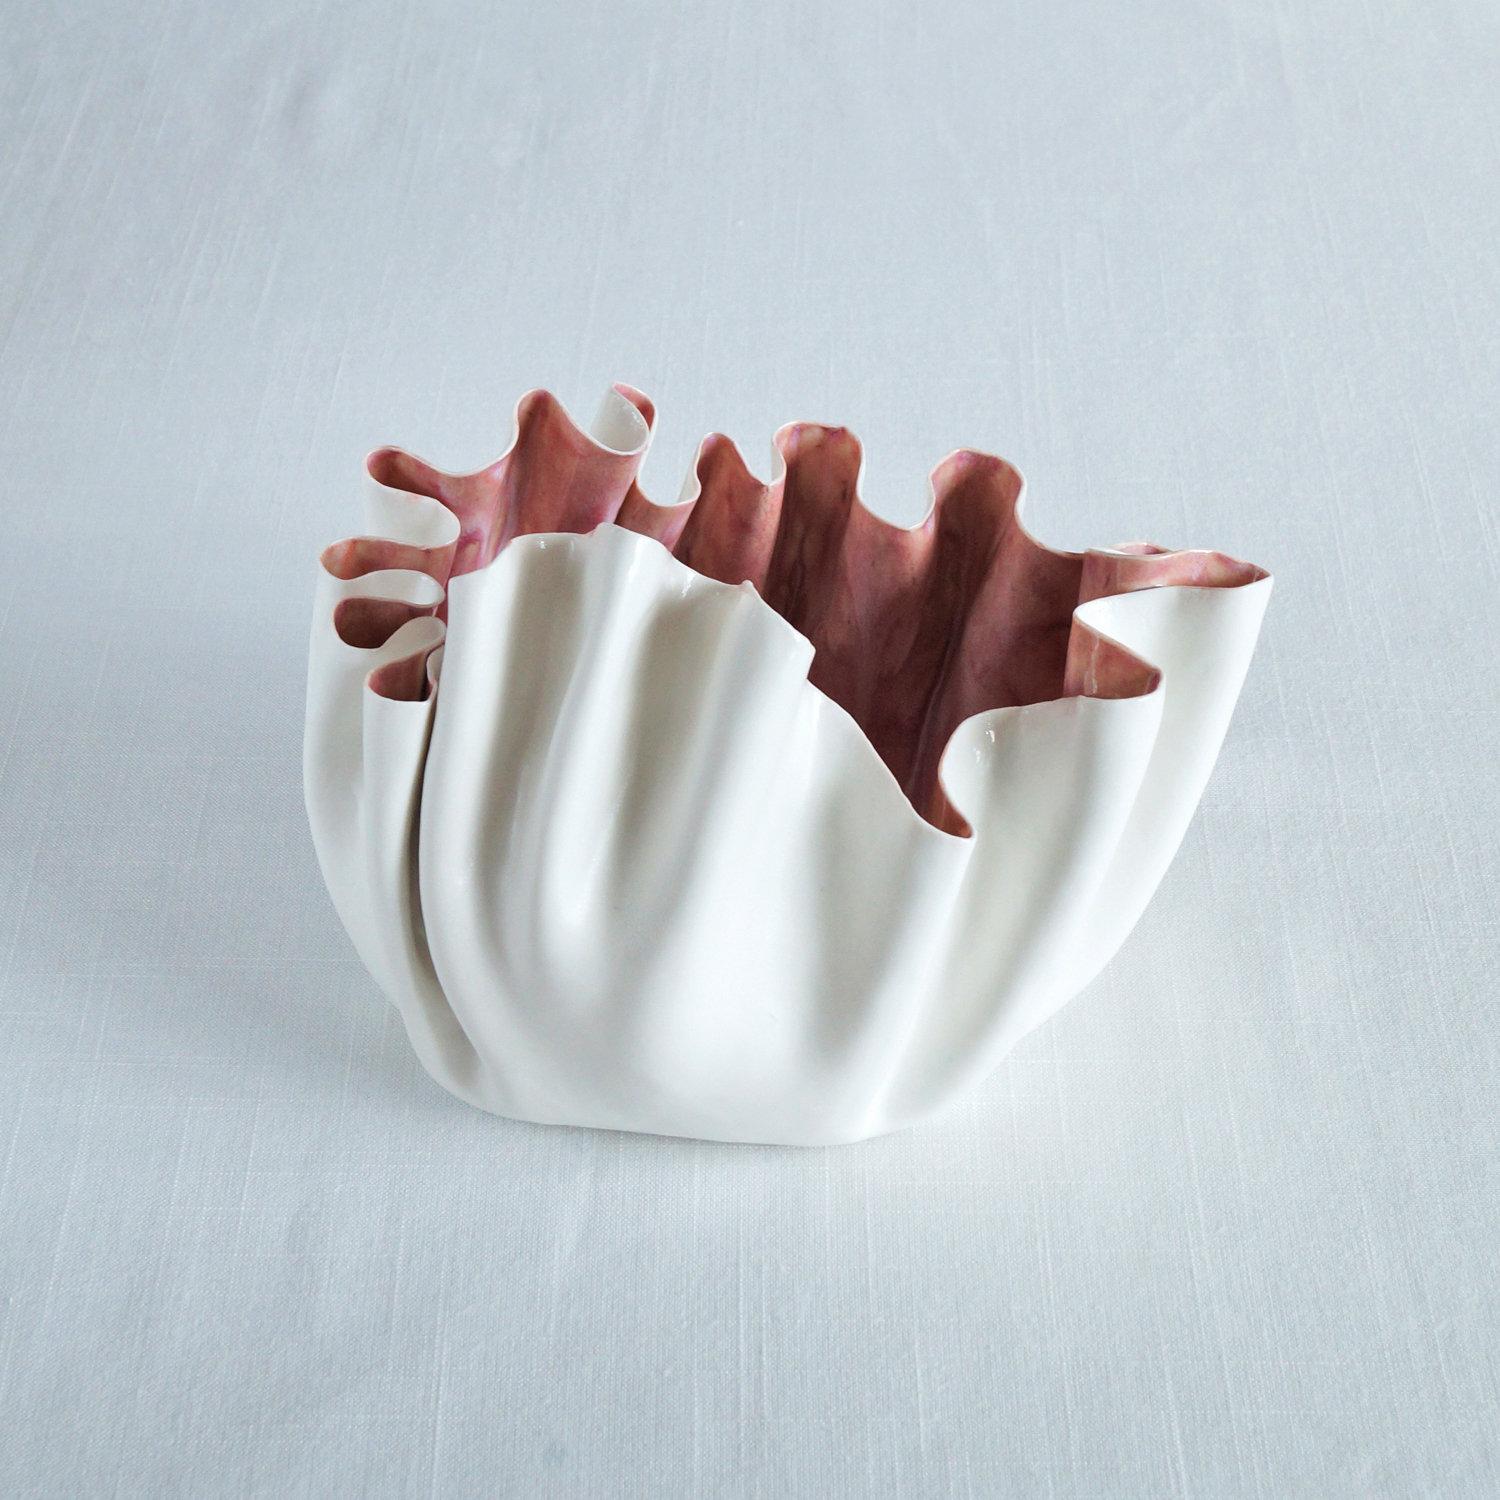 RUFFLED No8, white porcelain bowl, artisan bowl, artistic bowl, freeform bowl, statement bowl, shelf piece, focal point, soft